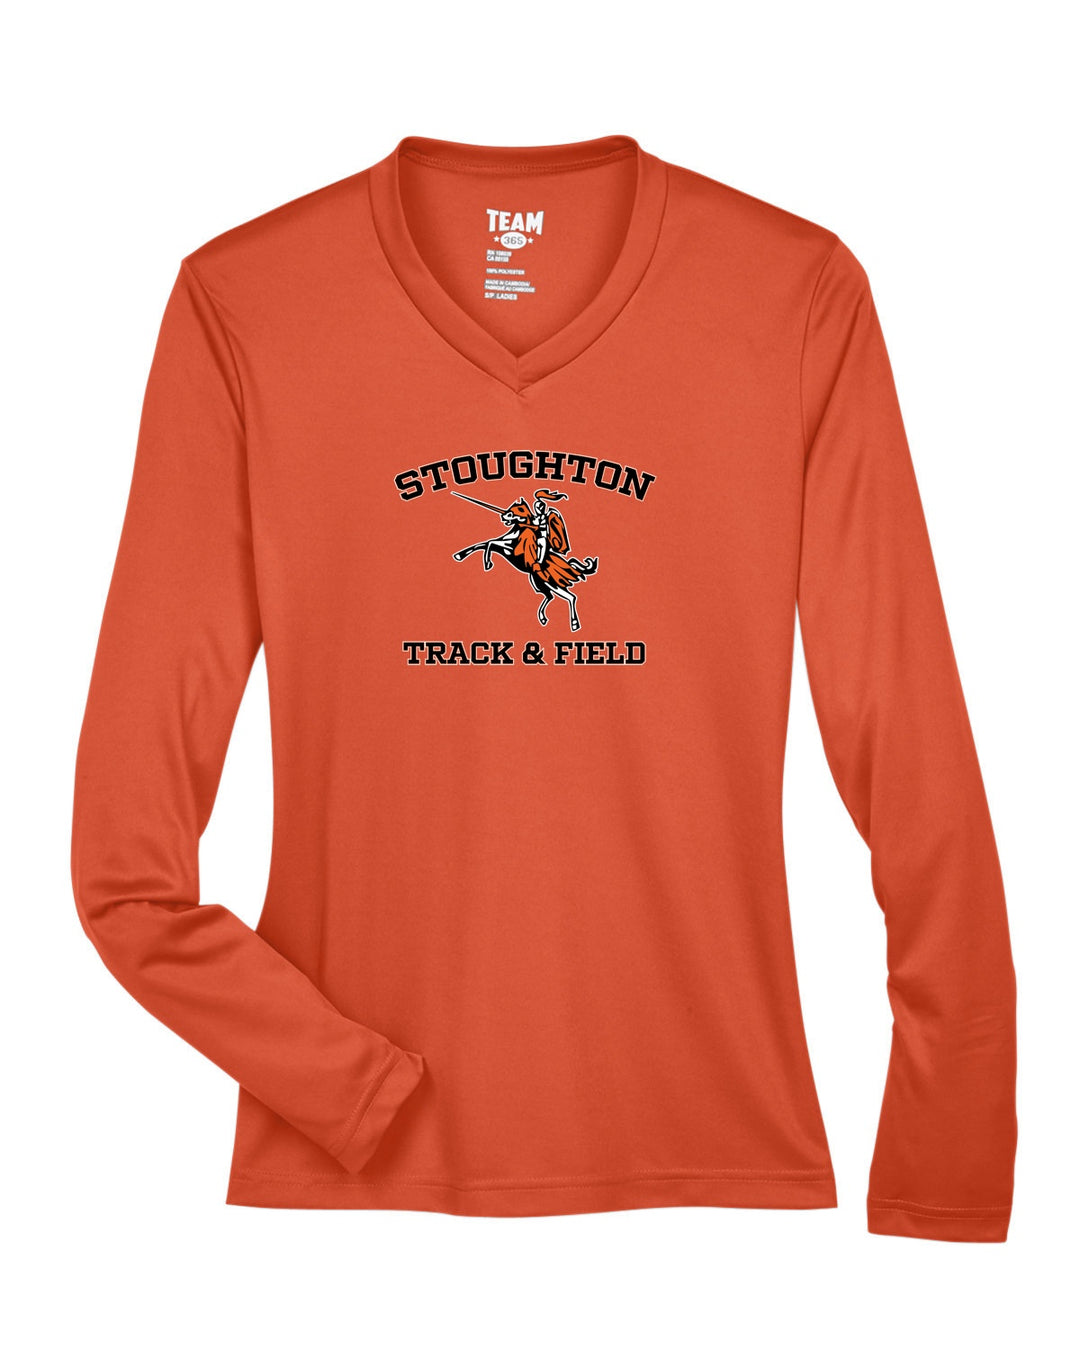 Stoughton Track & Field - Team 365 Women's Zone Performance Long Sleeve T-Shirt (TT11WL)